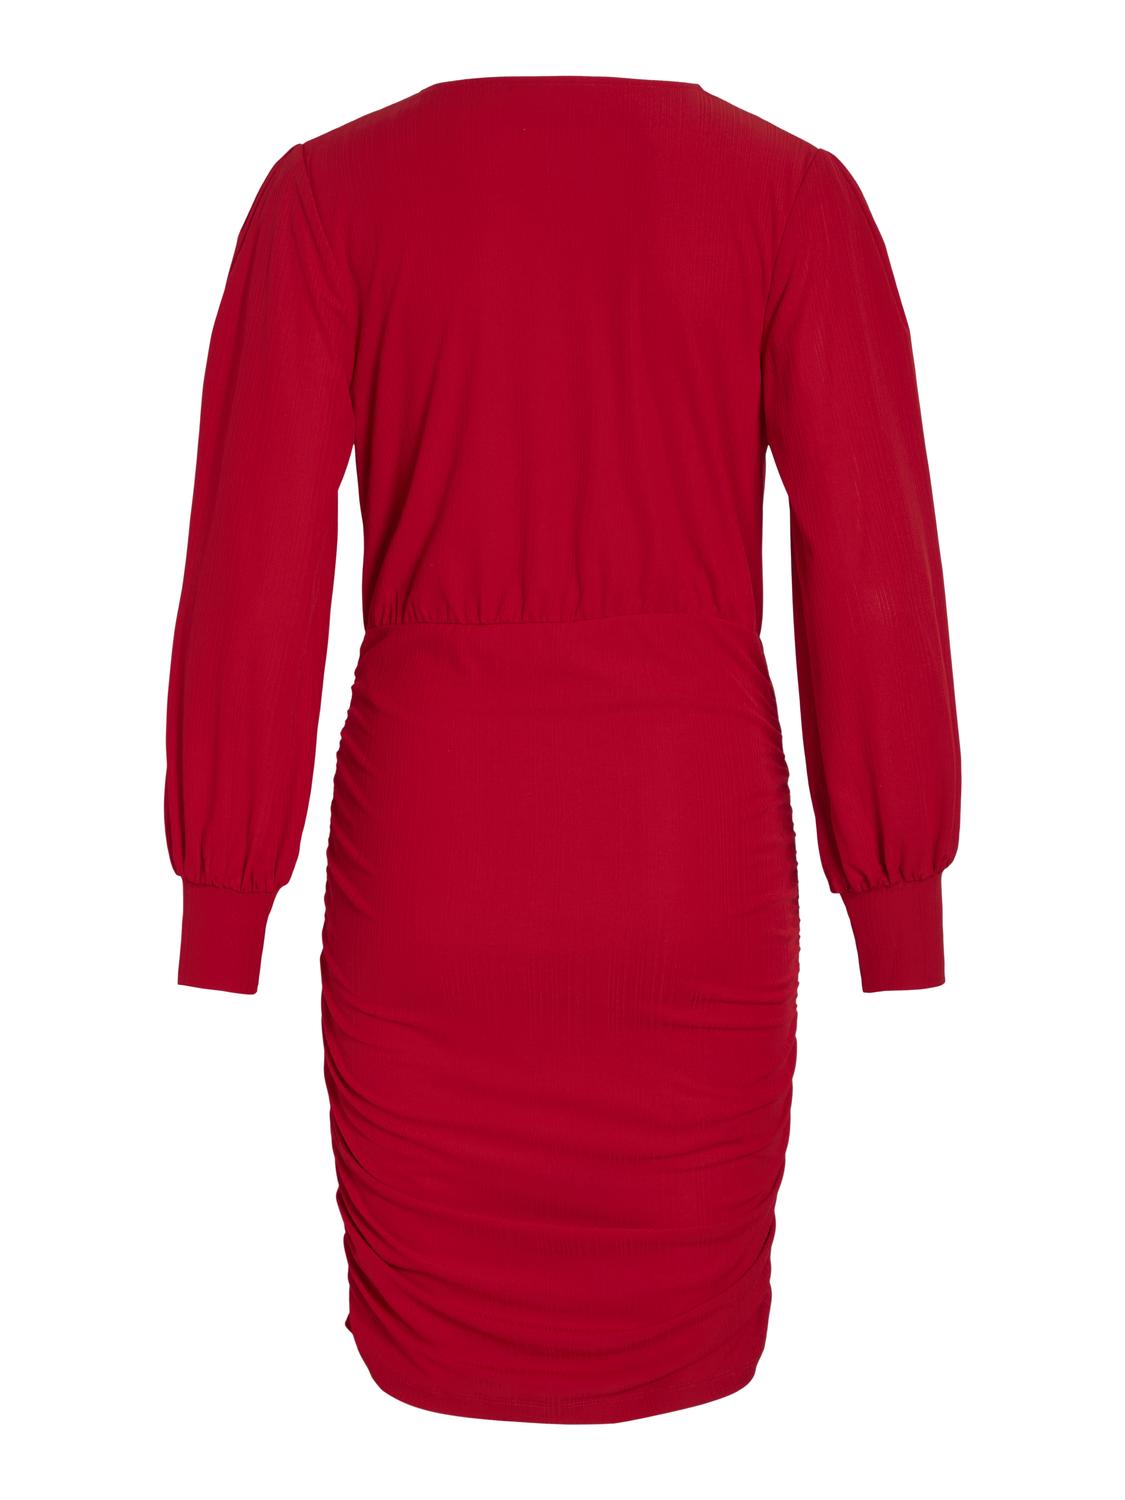 VIPARTINA Dress - Equestrian Red